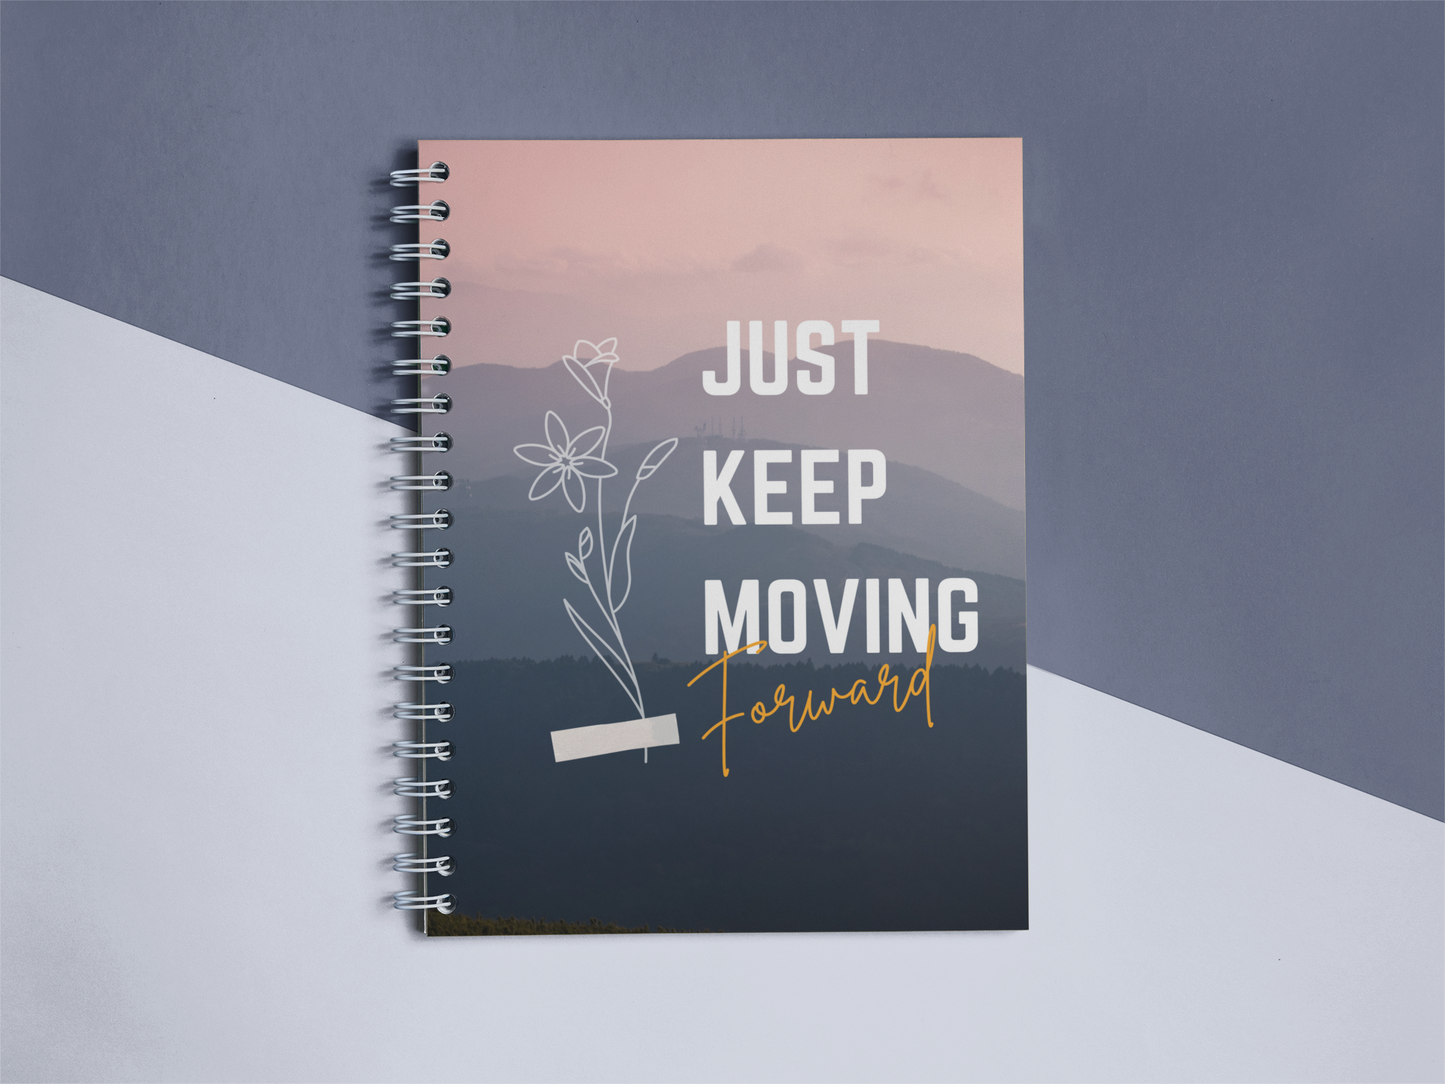 Just keep moving forward Notebook